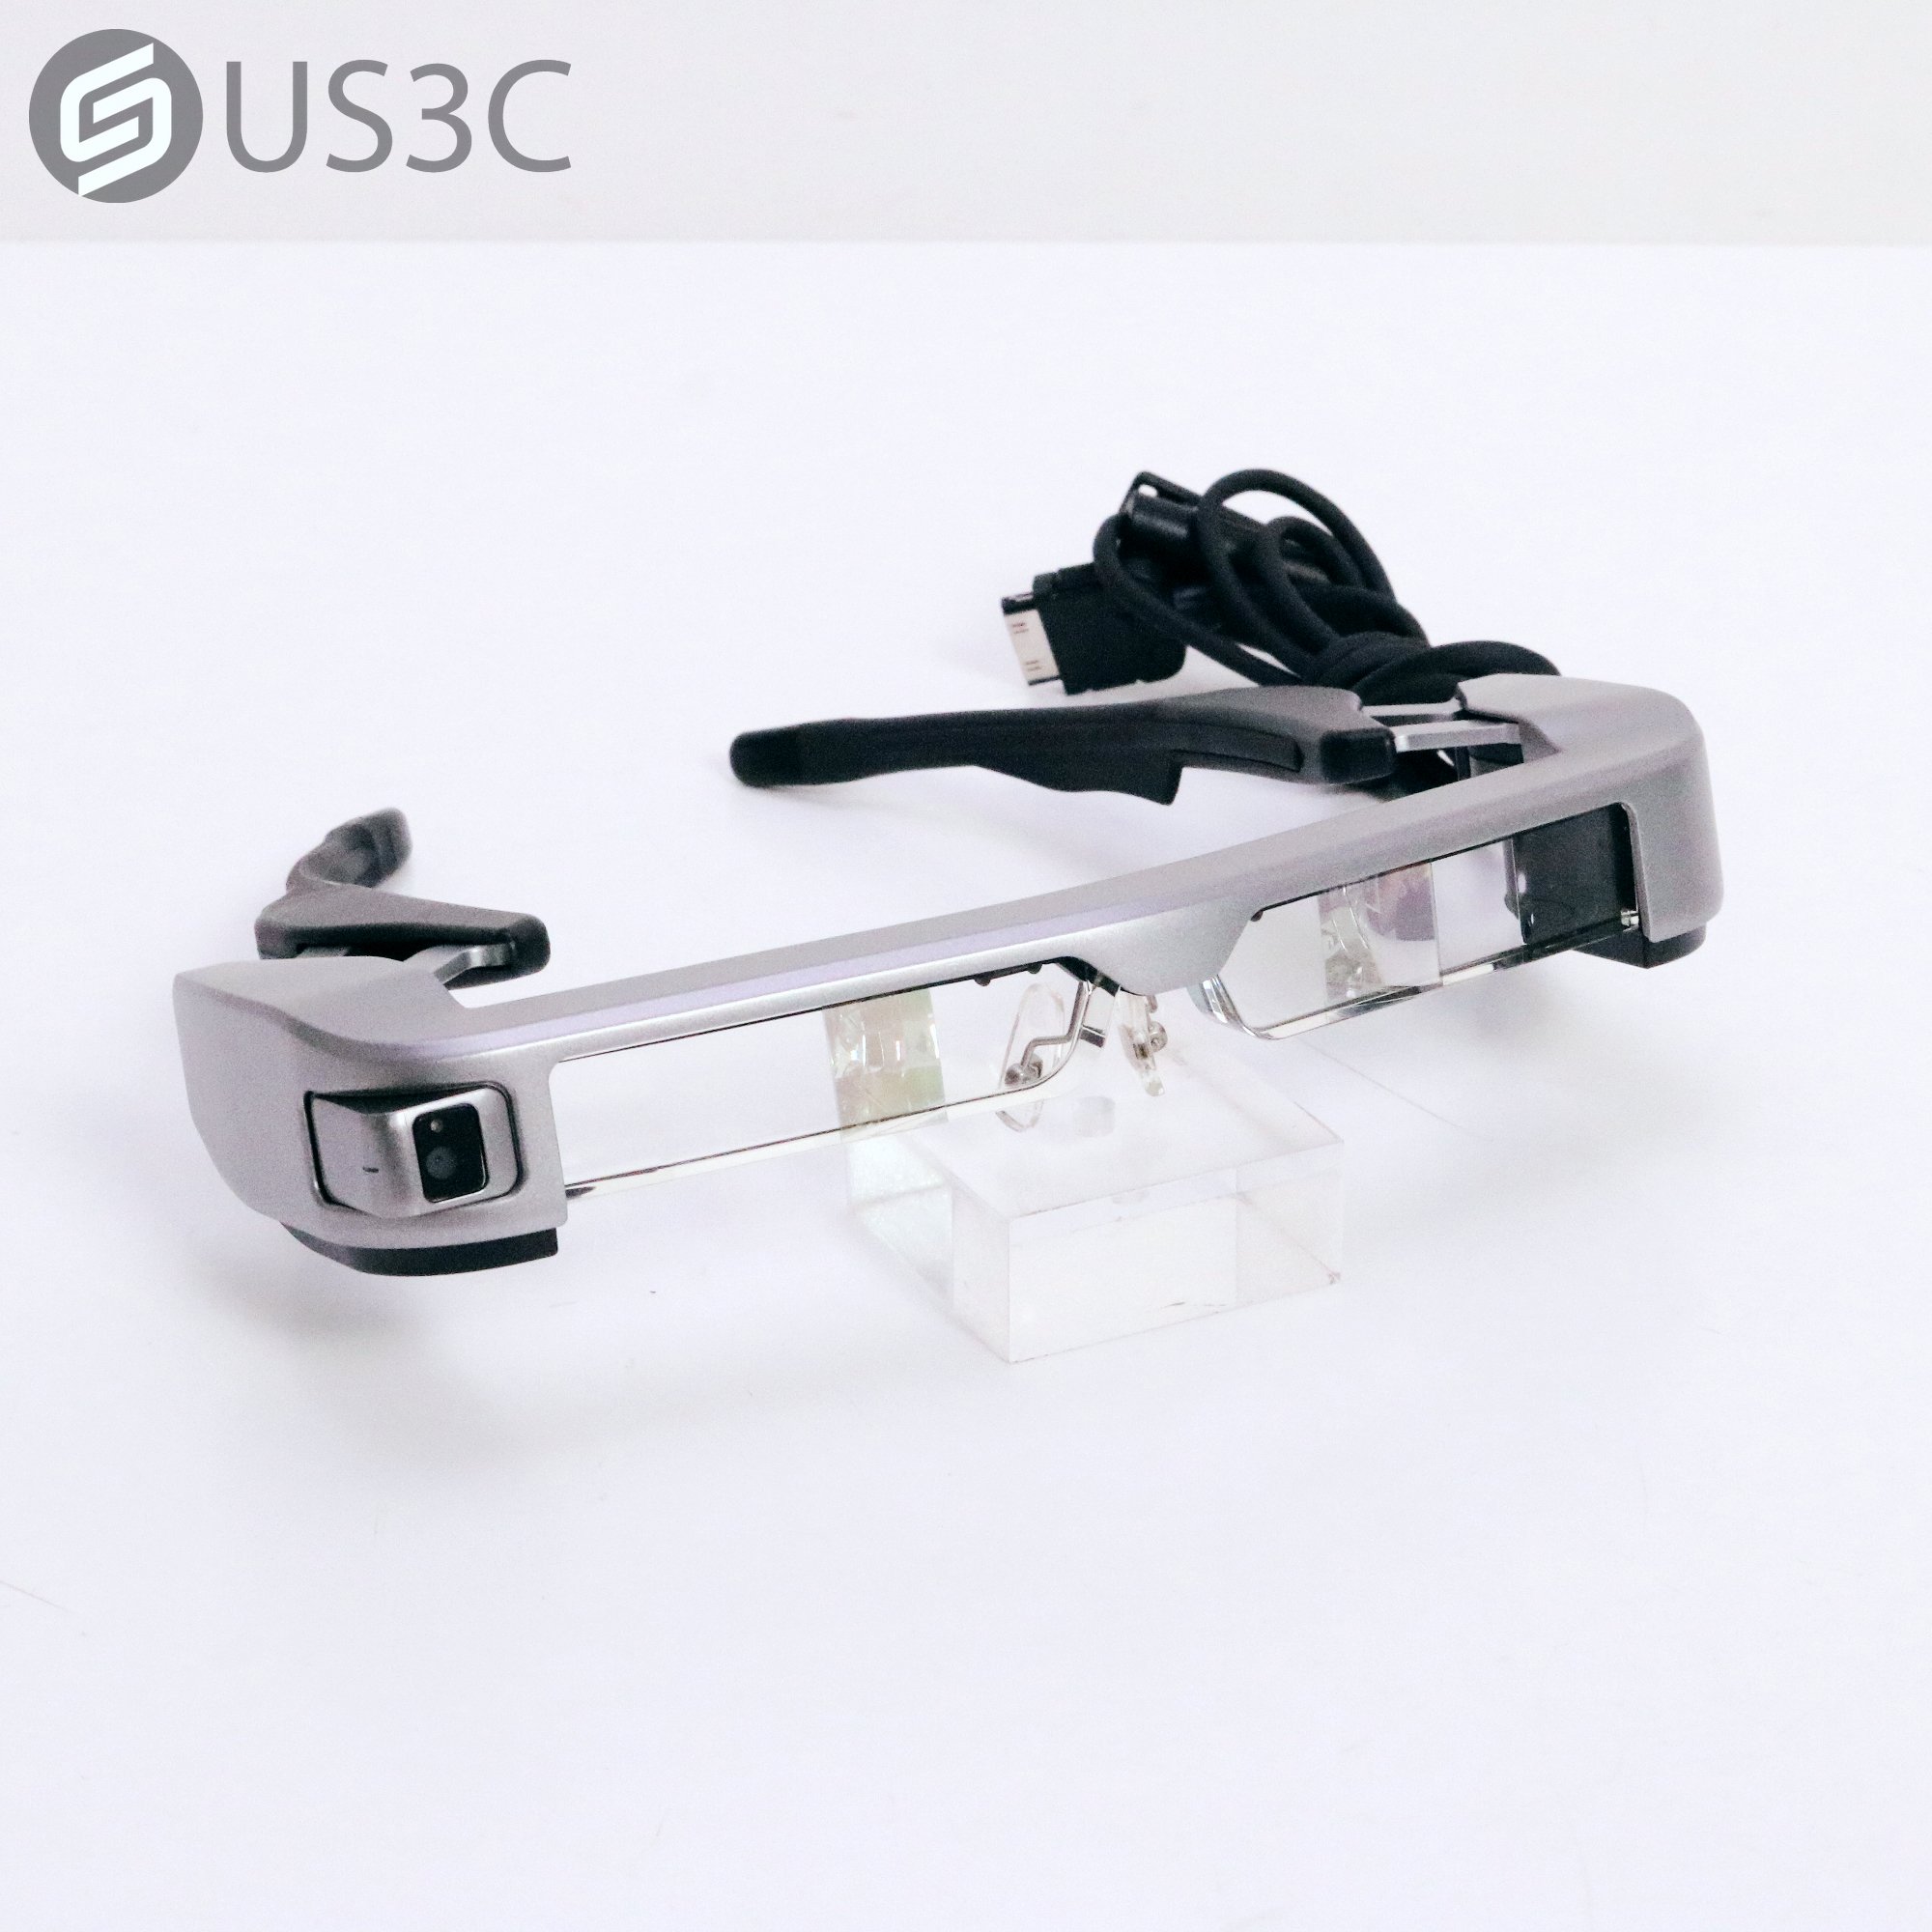 【US3C-青海店】愛普生 EPSON Moverio BT-350 AR智慧眼鏡 Si-OLED雙眼穿透式 二手智慧穿戴裝置